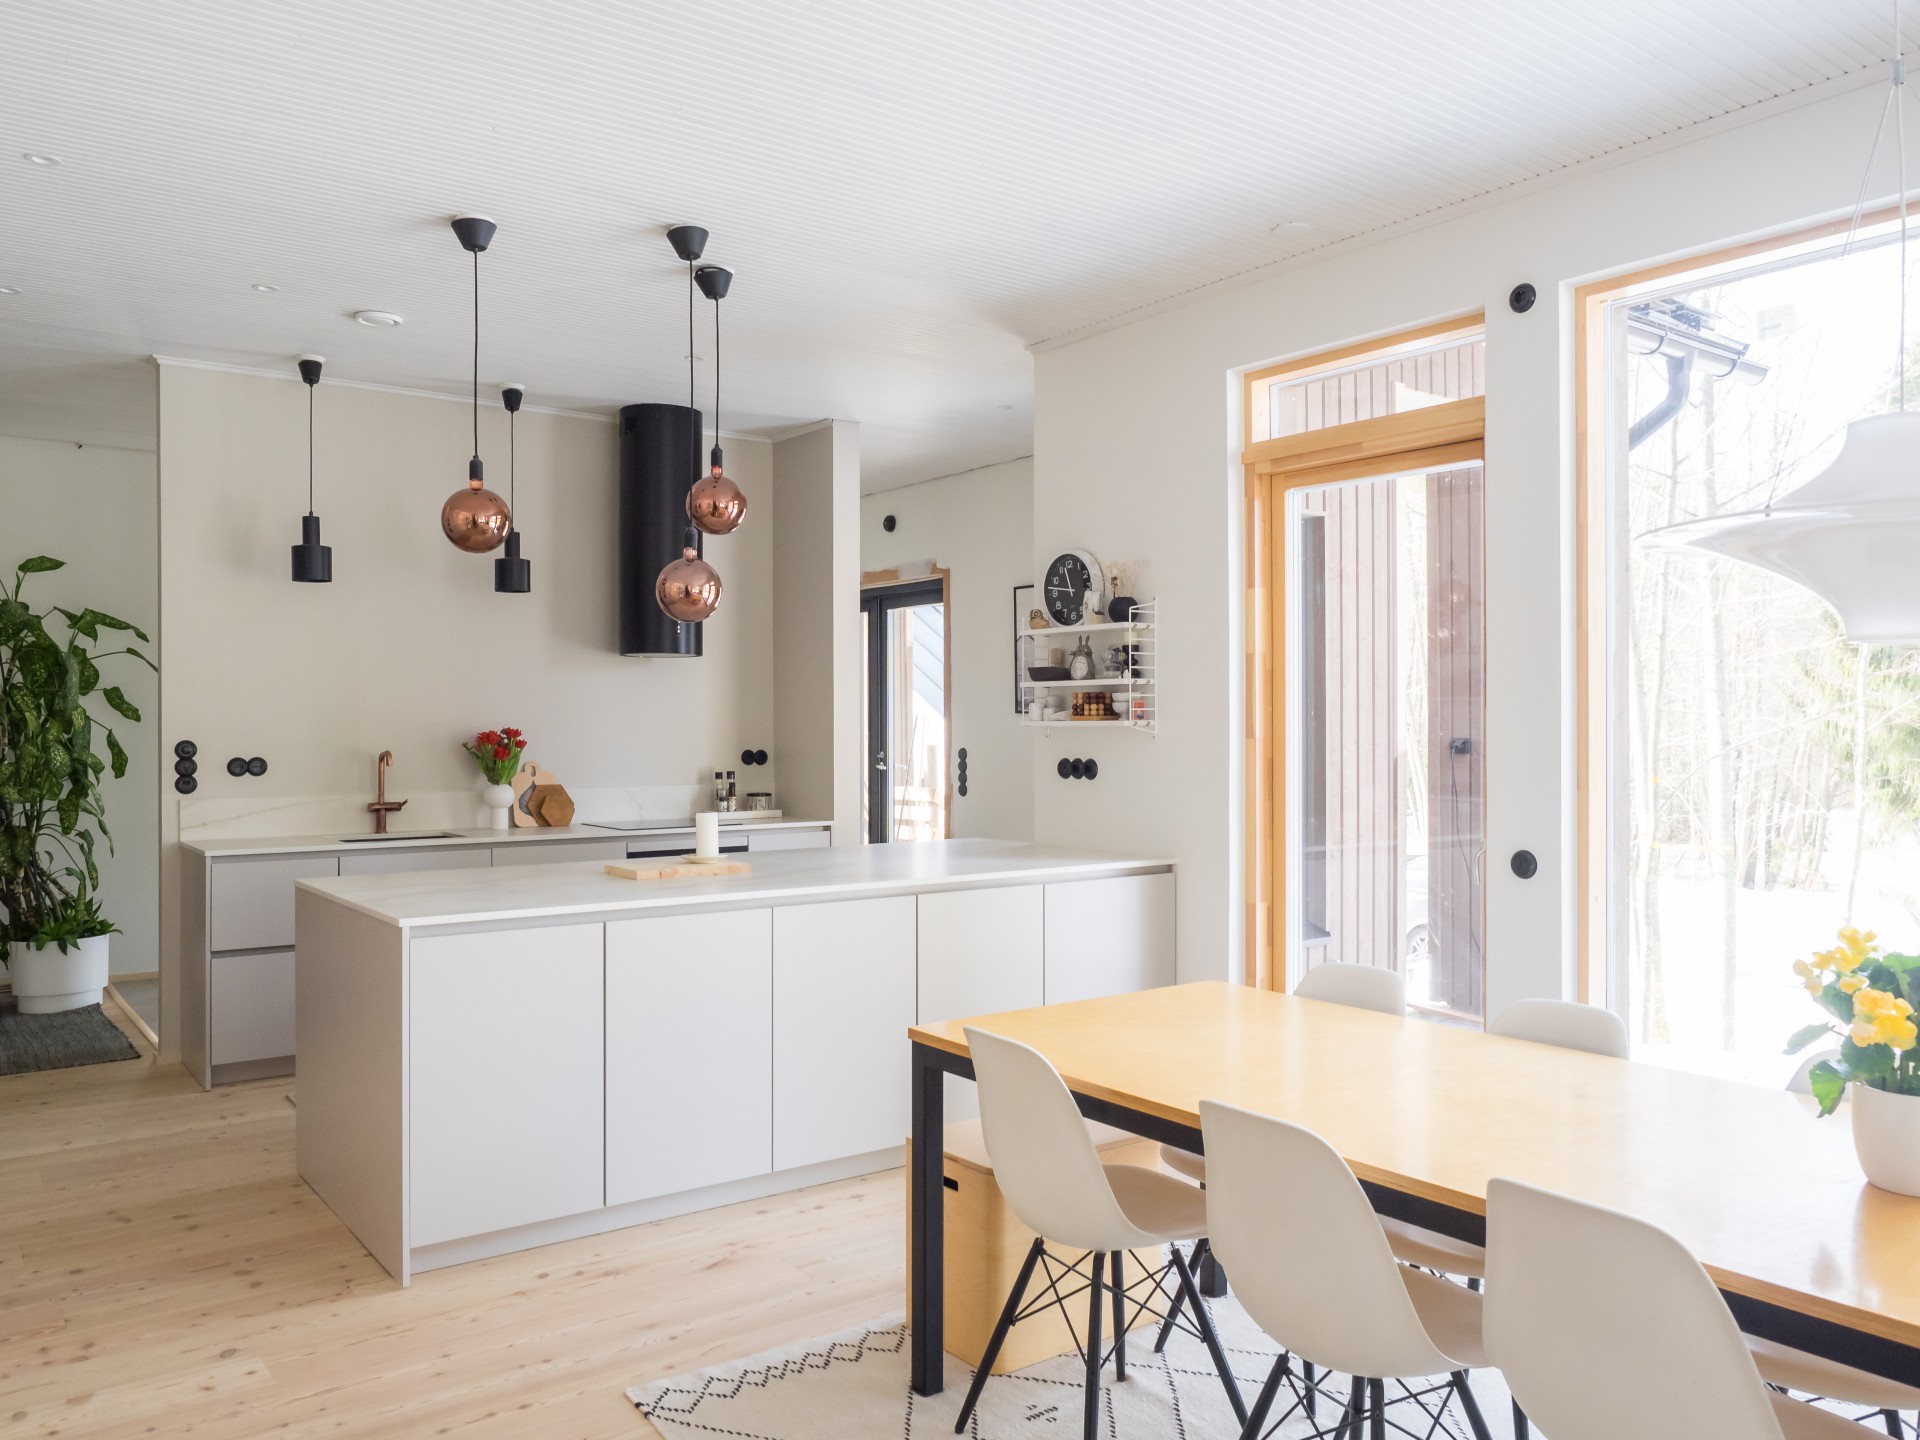 Image of DektonRem CMSArchitects Spain13 in Interior designer Sanna Piitulainen chose Dekton Rem for her new kitchen - Cosentino